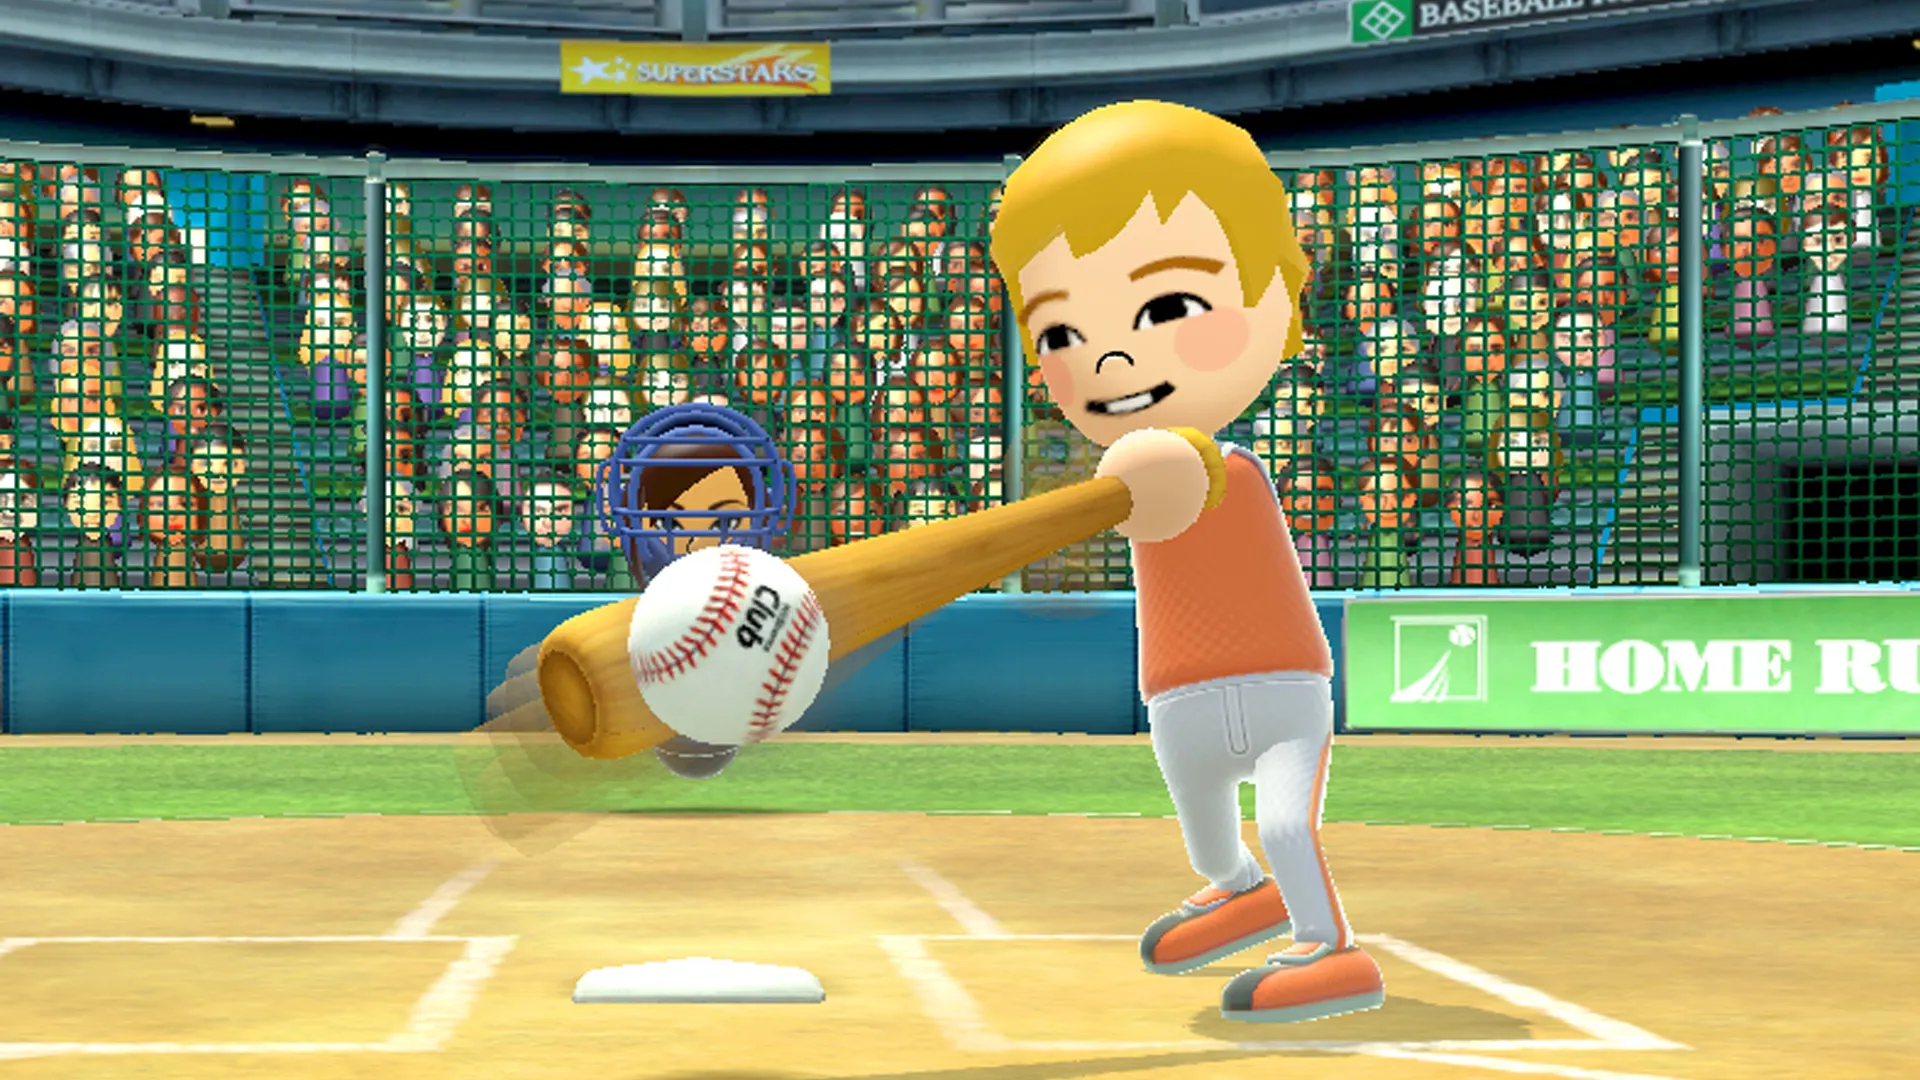 Nintendo Switch Sports Missing Games: Boxing, Baseball DLC? - GameRevolution